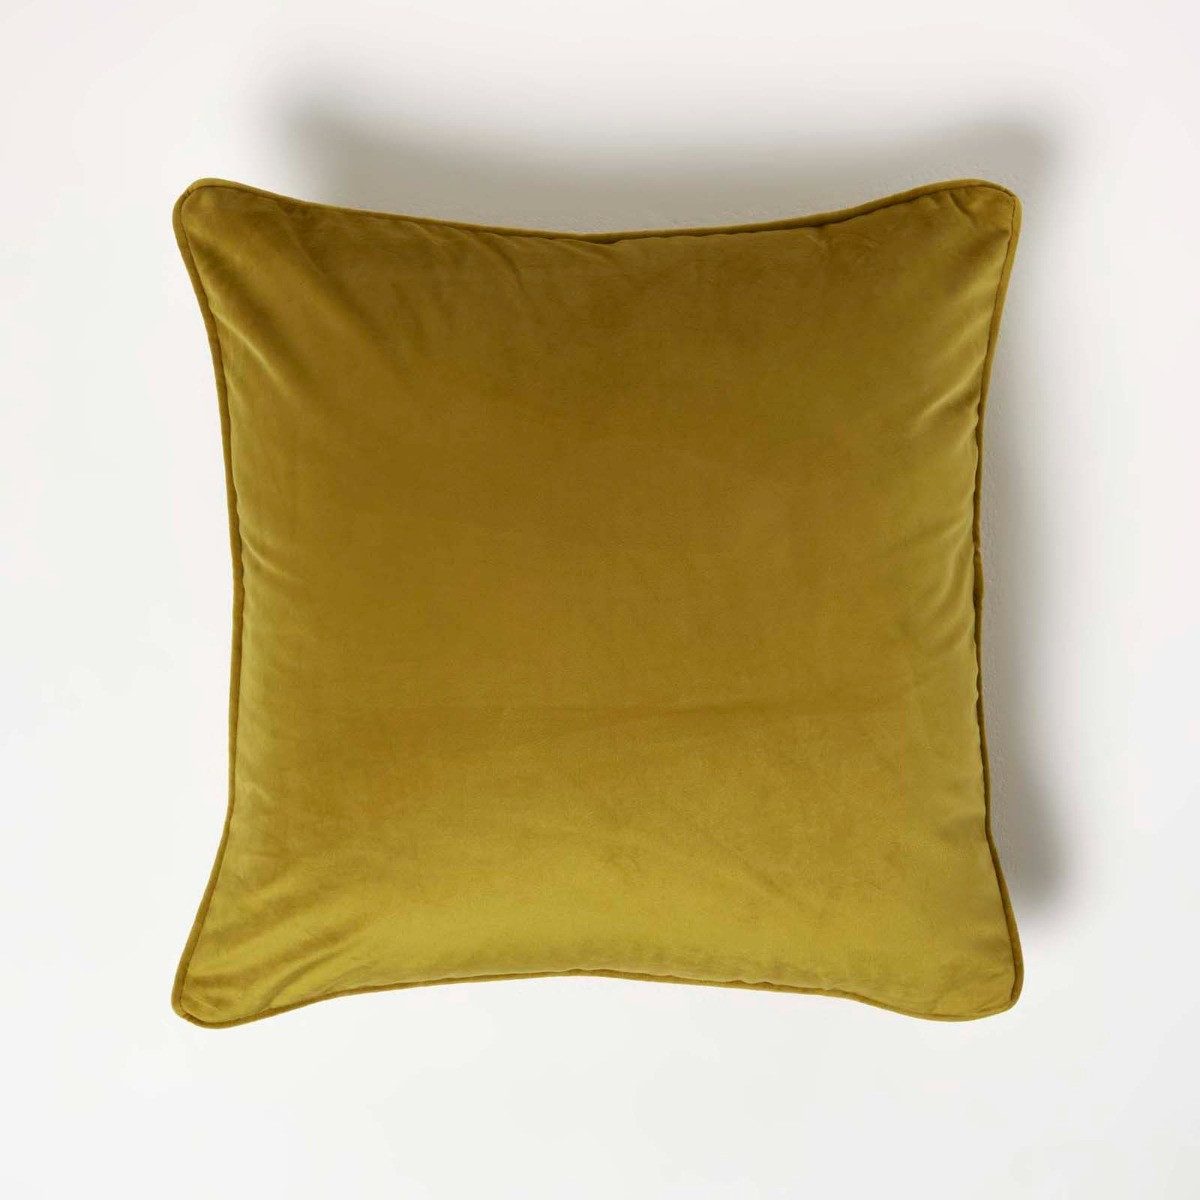 Kissenhülle Samt-Kissenbezug gold mit Paspel, 46 x 46 cm, Homescapes